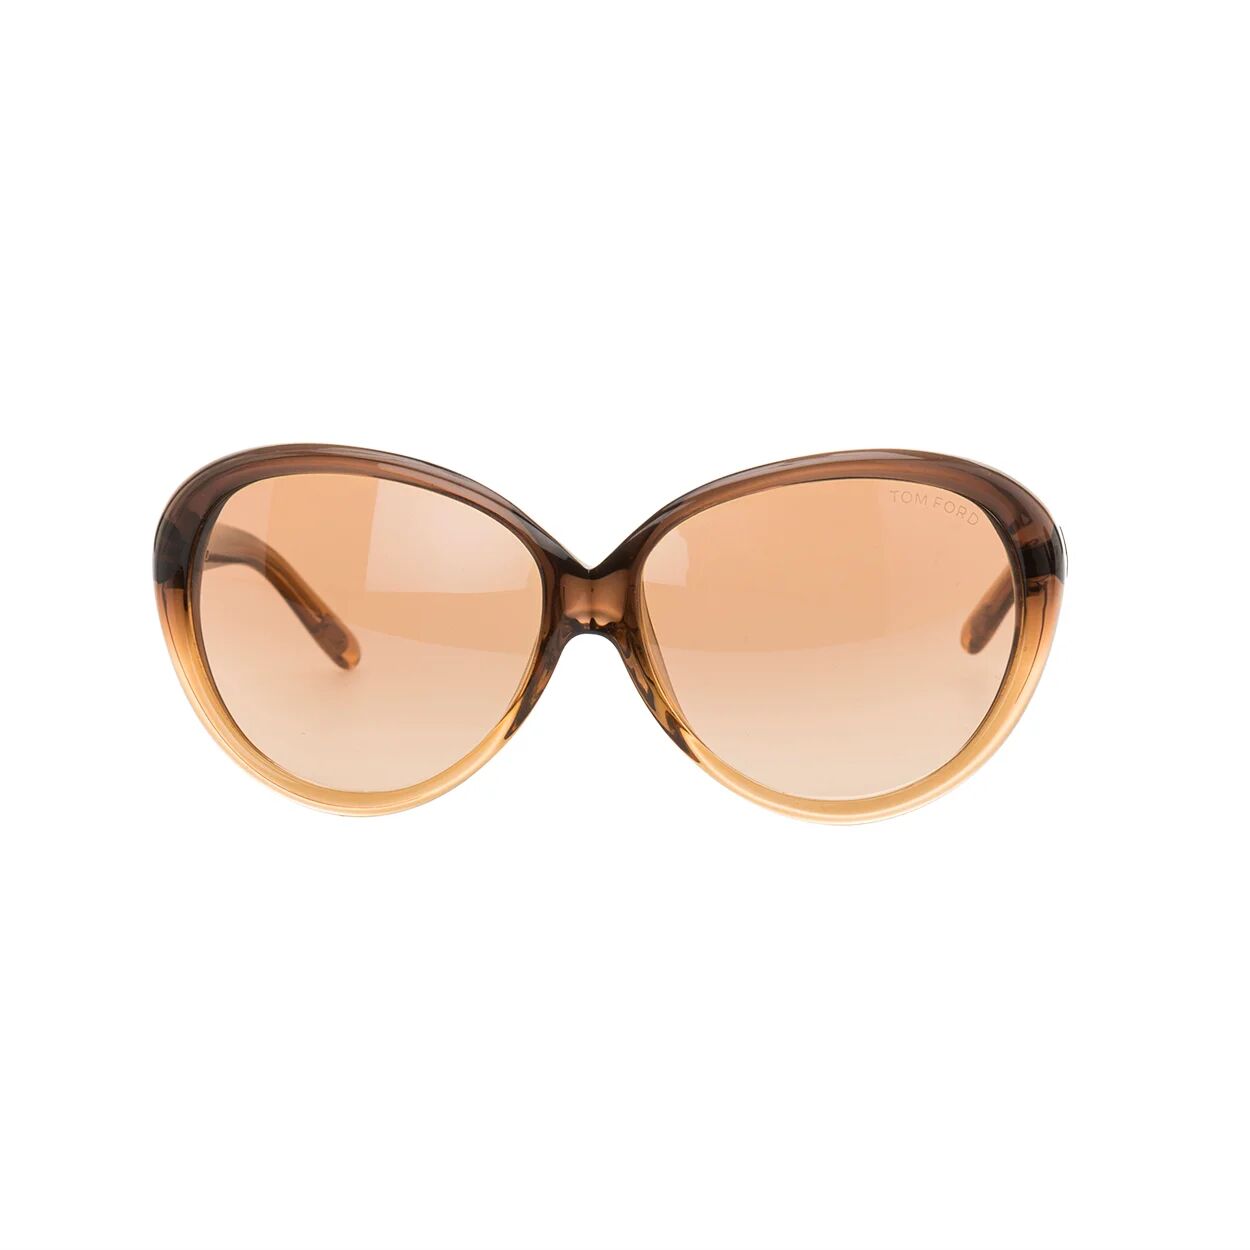 Tom Ford occhiali da sole marrone Annabelle